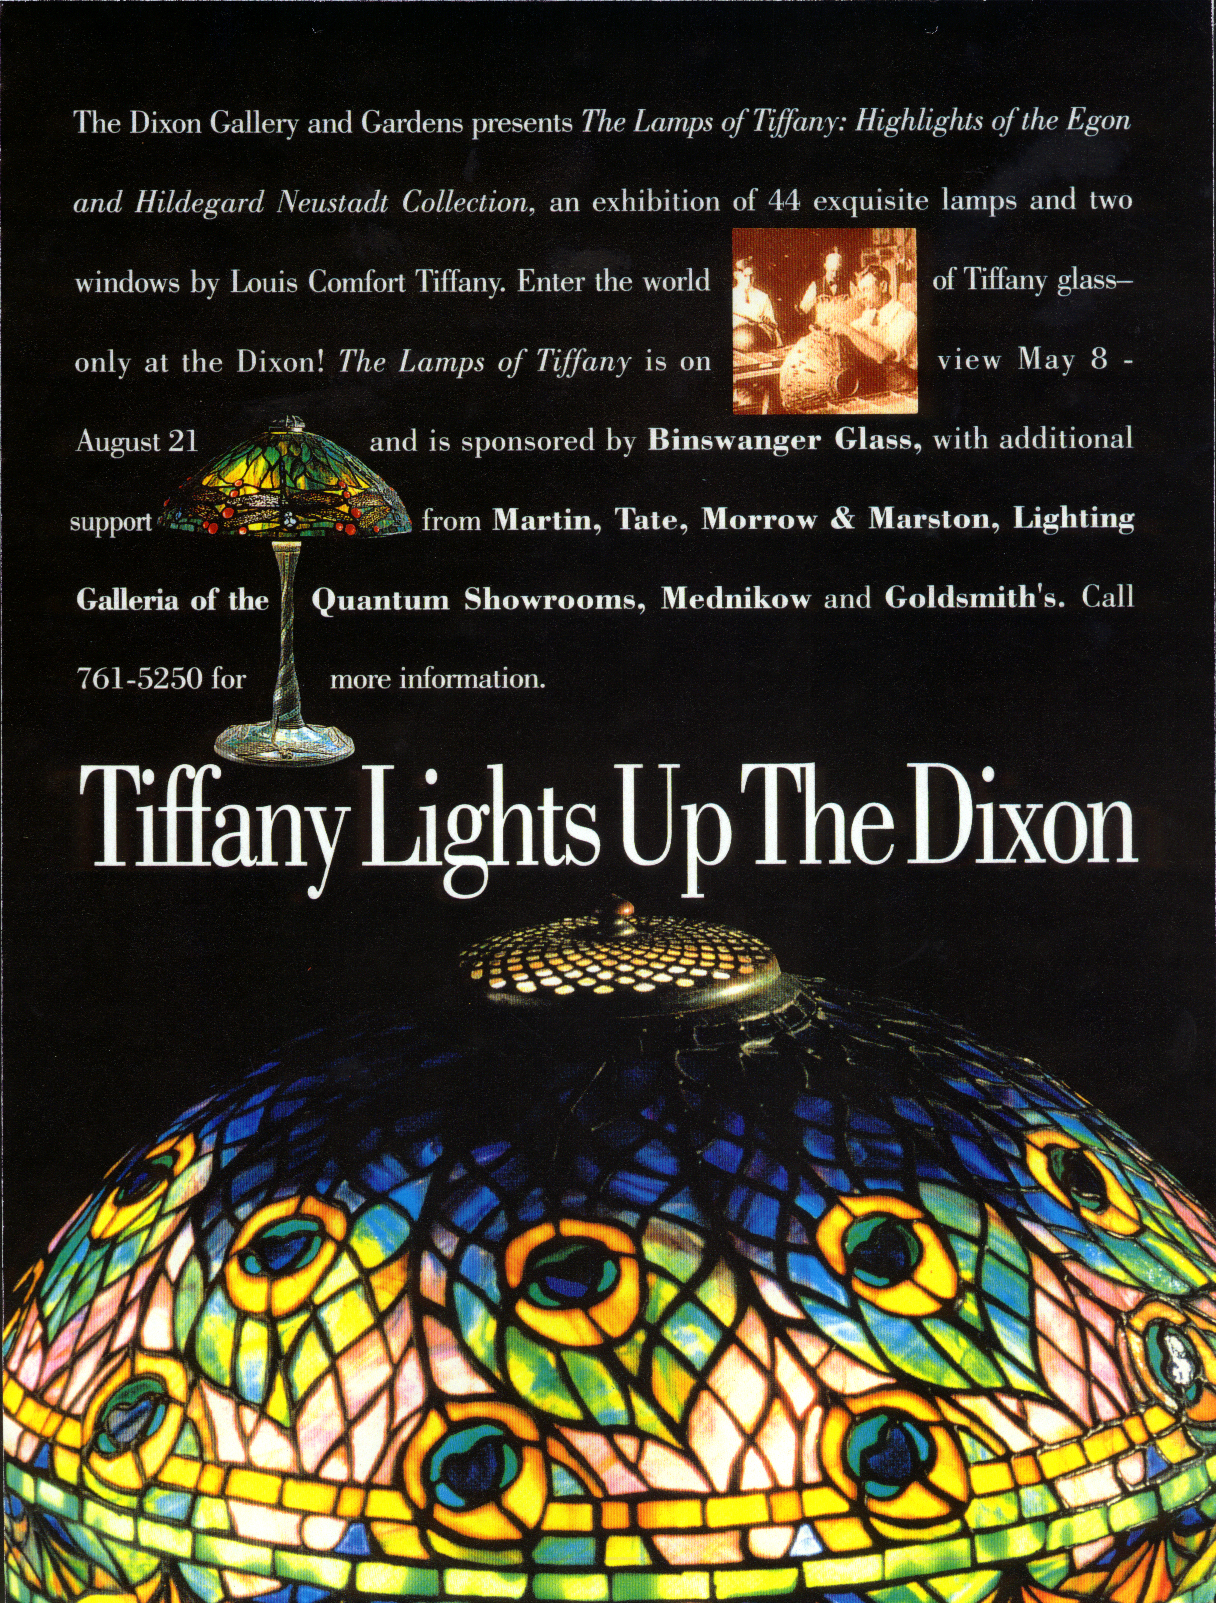  Dixon Gallery &amp; Gardens “Tiffany Lights Up The Dixon” print ad 